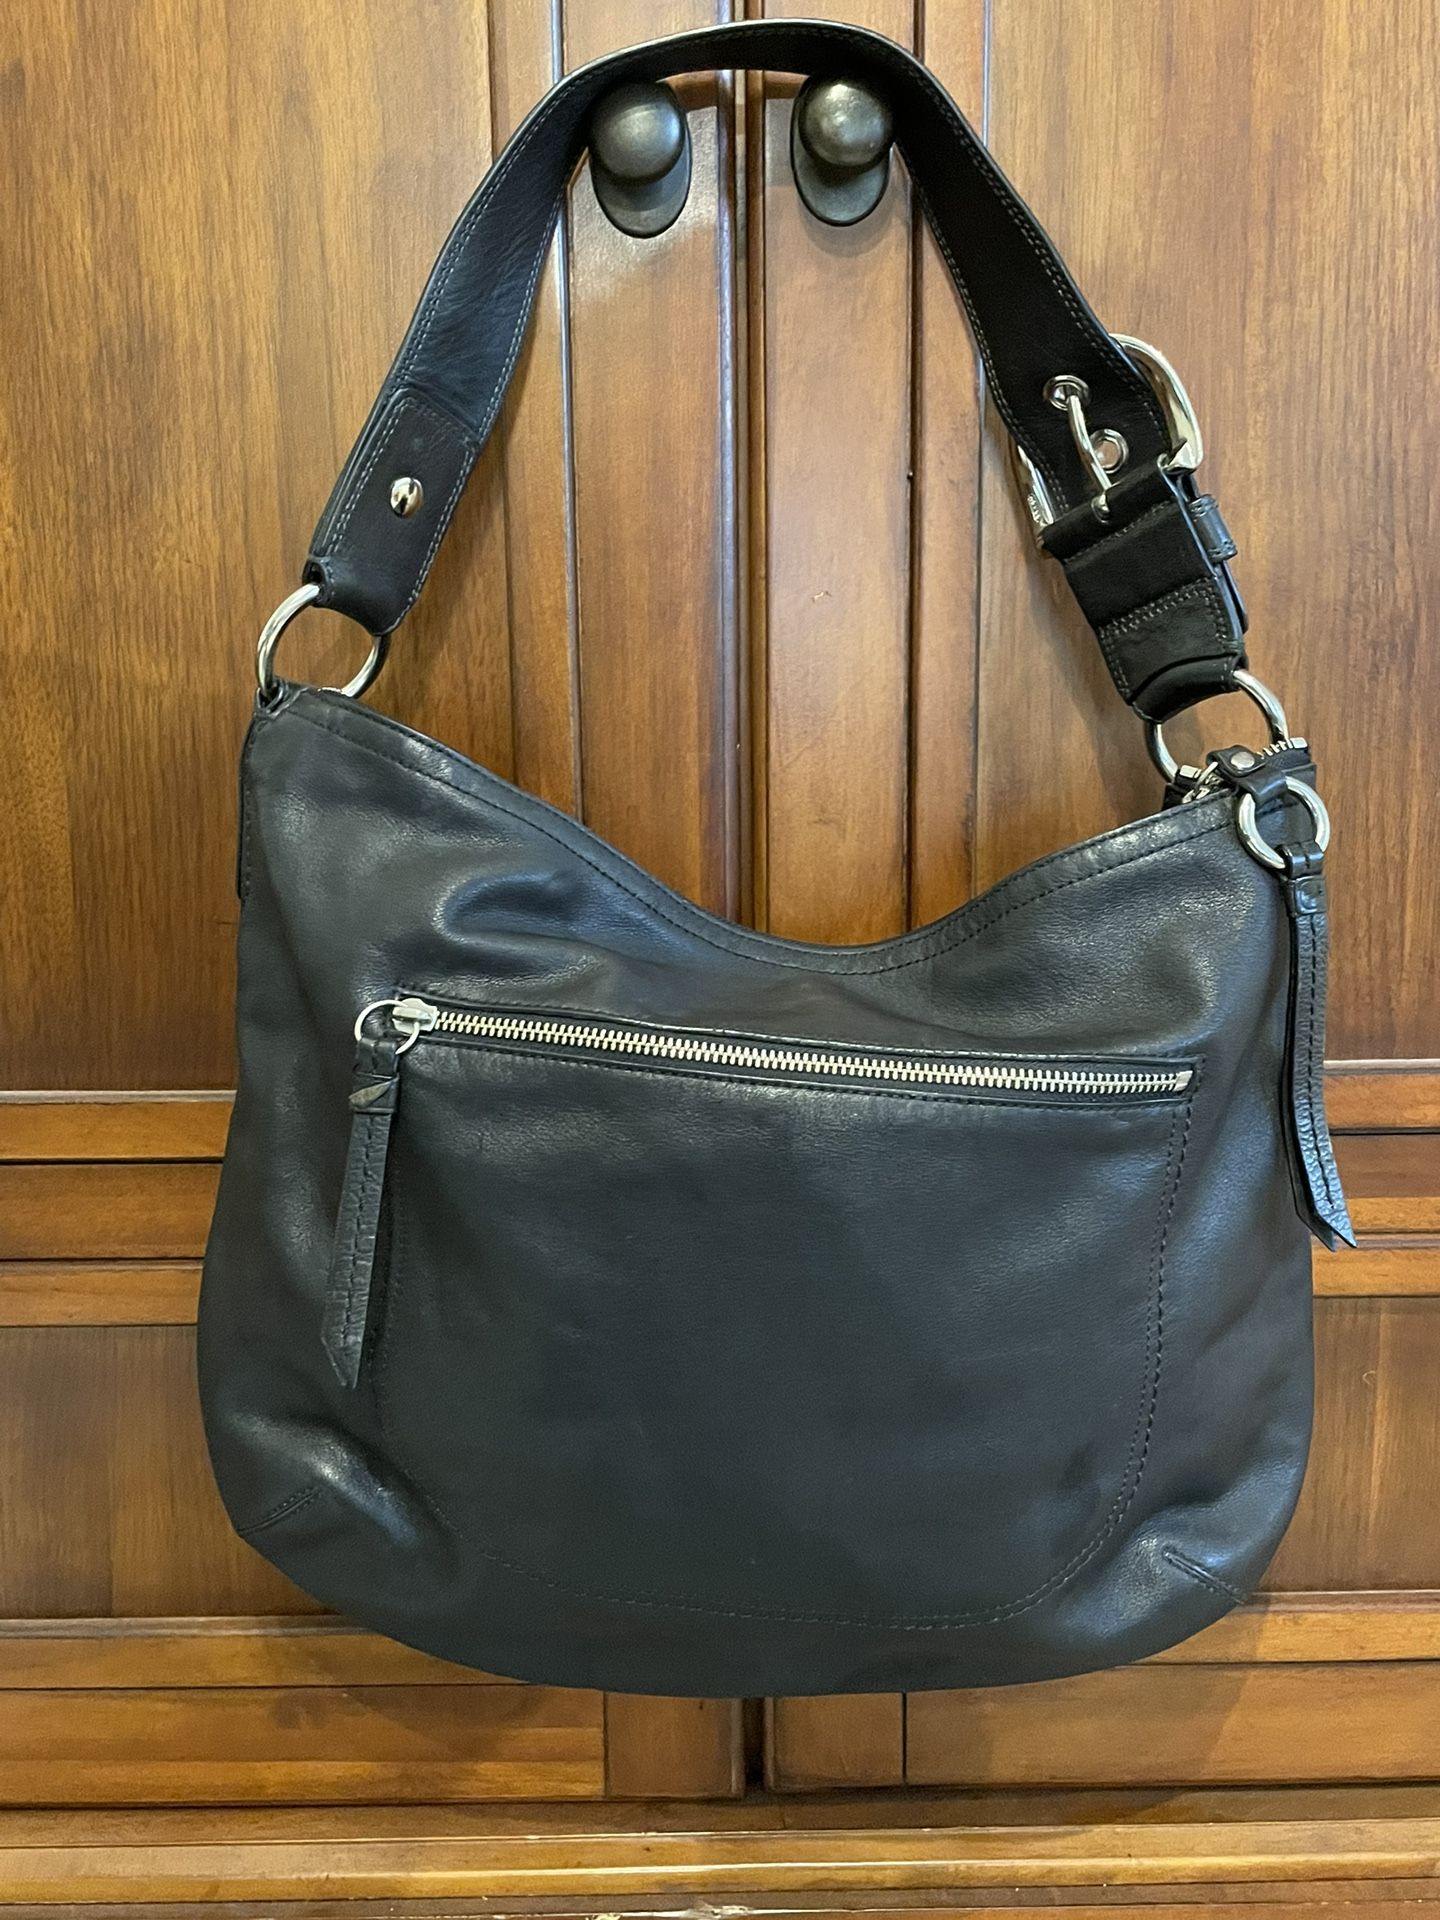 Genuine COACH Boho -Hobo Purse / Shoulder Bag - Black Leather